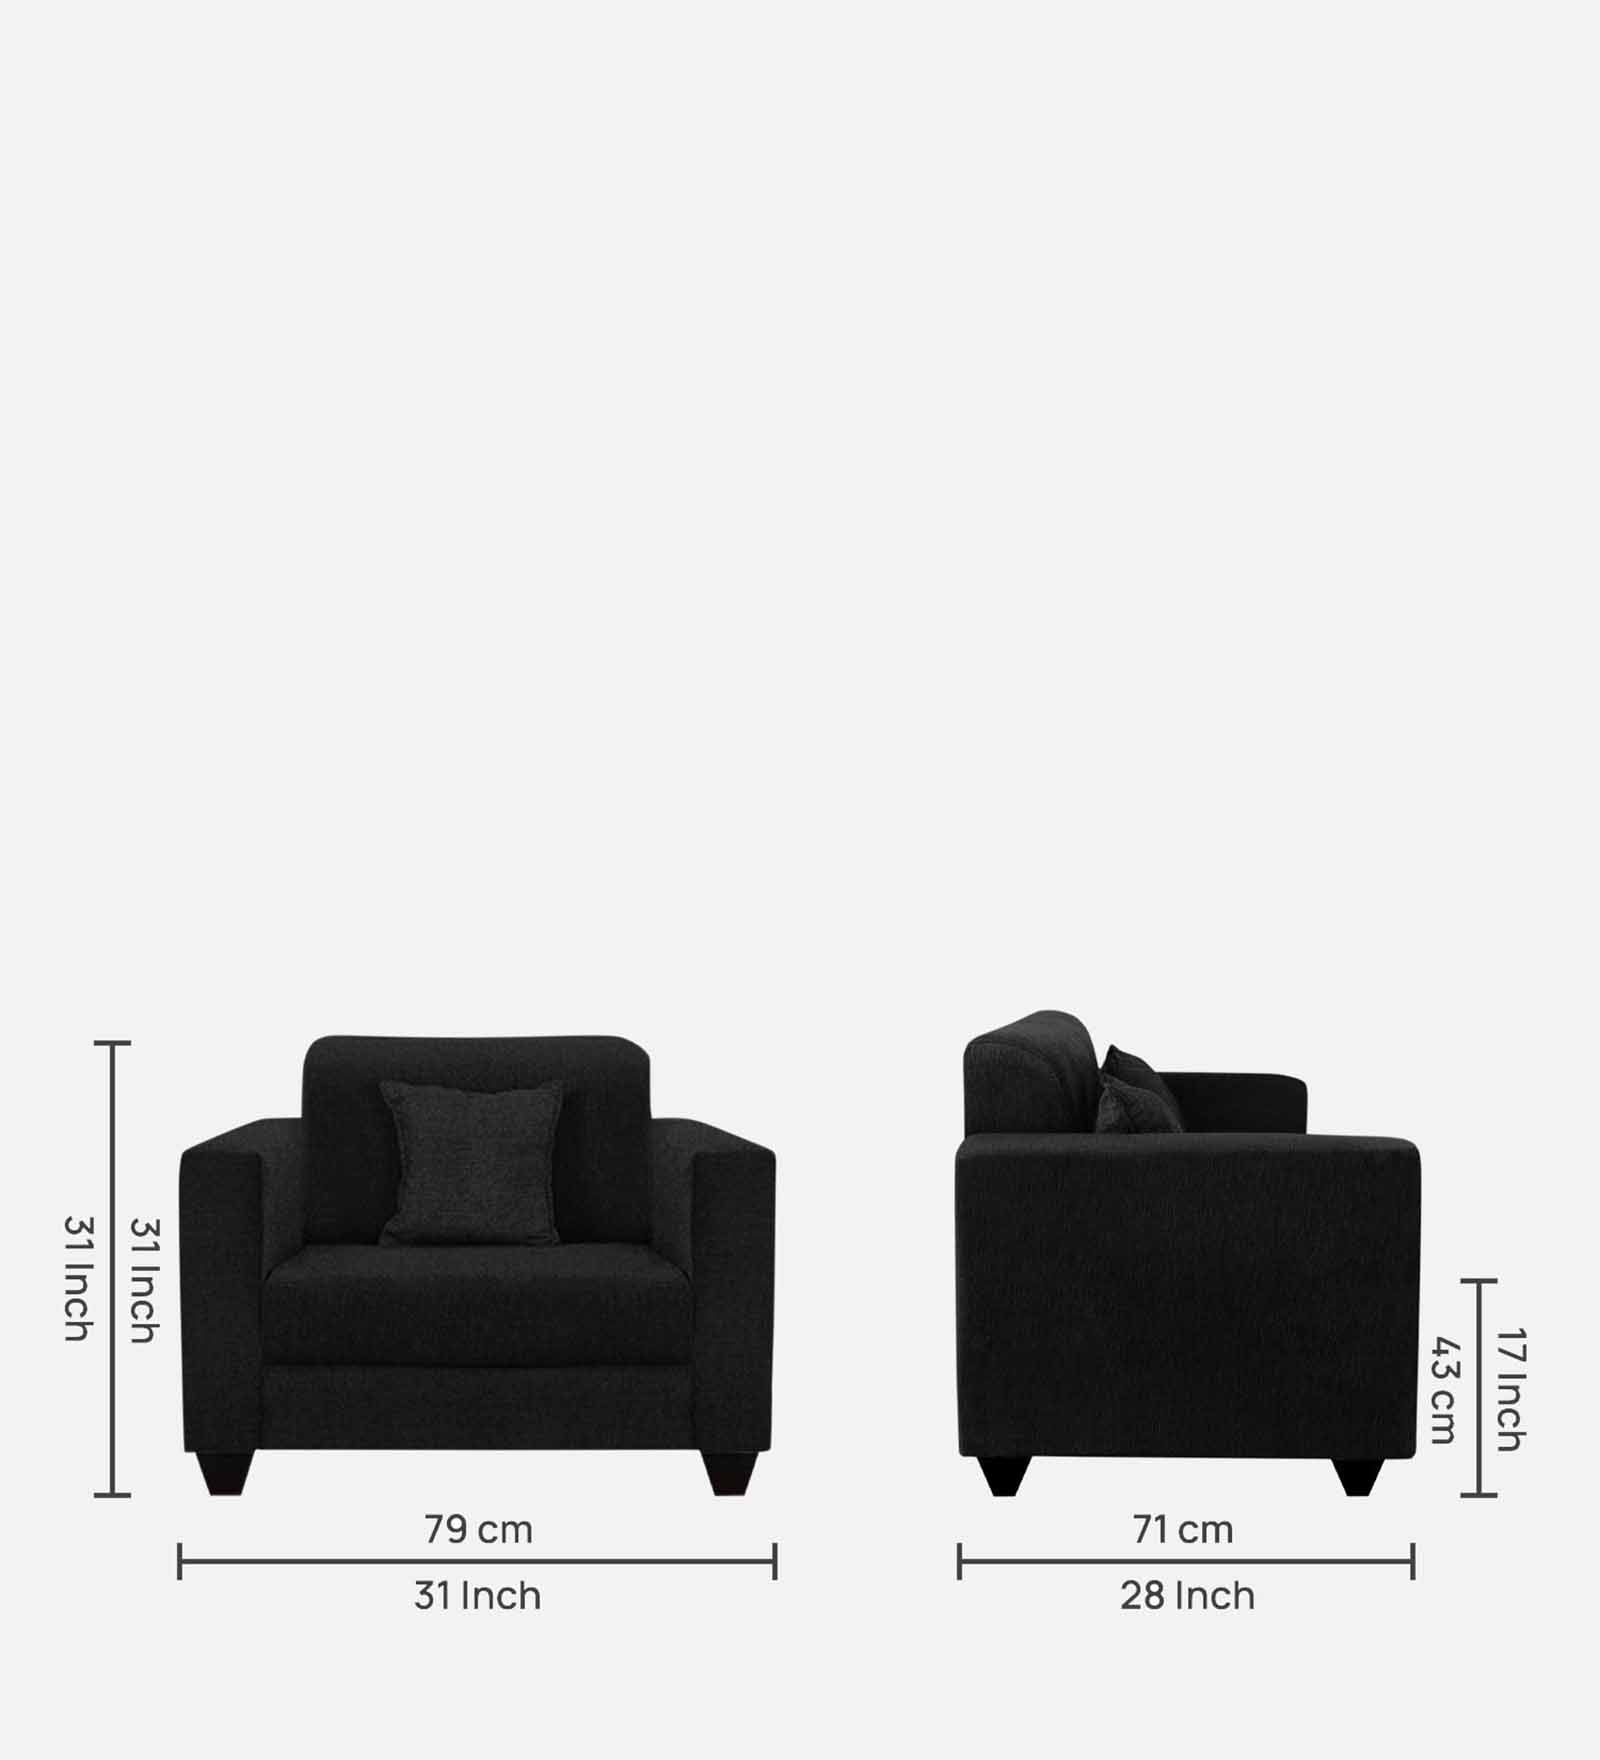 Nebula Fabric 1 Seater Sofa in Zed Black Colour